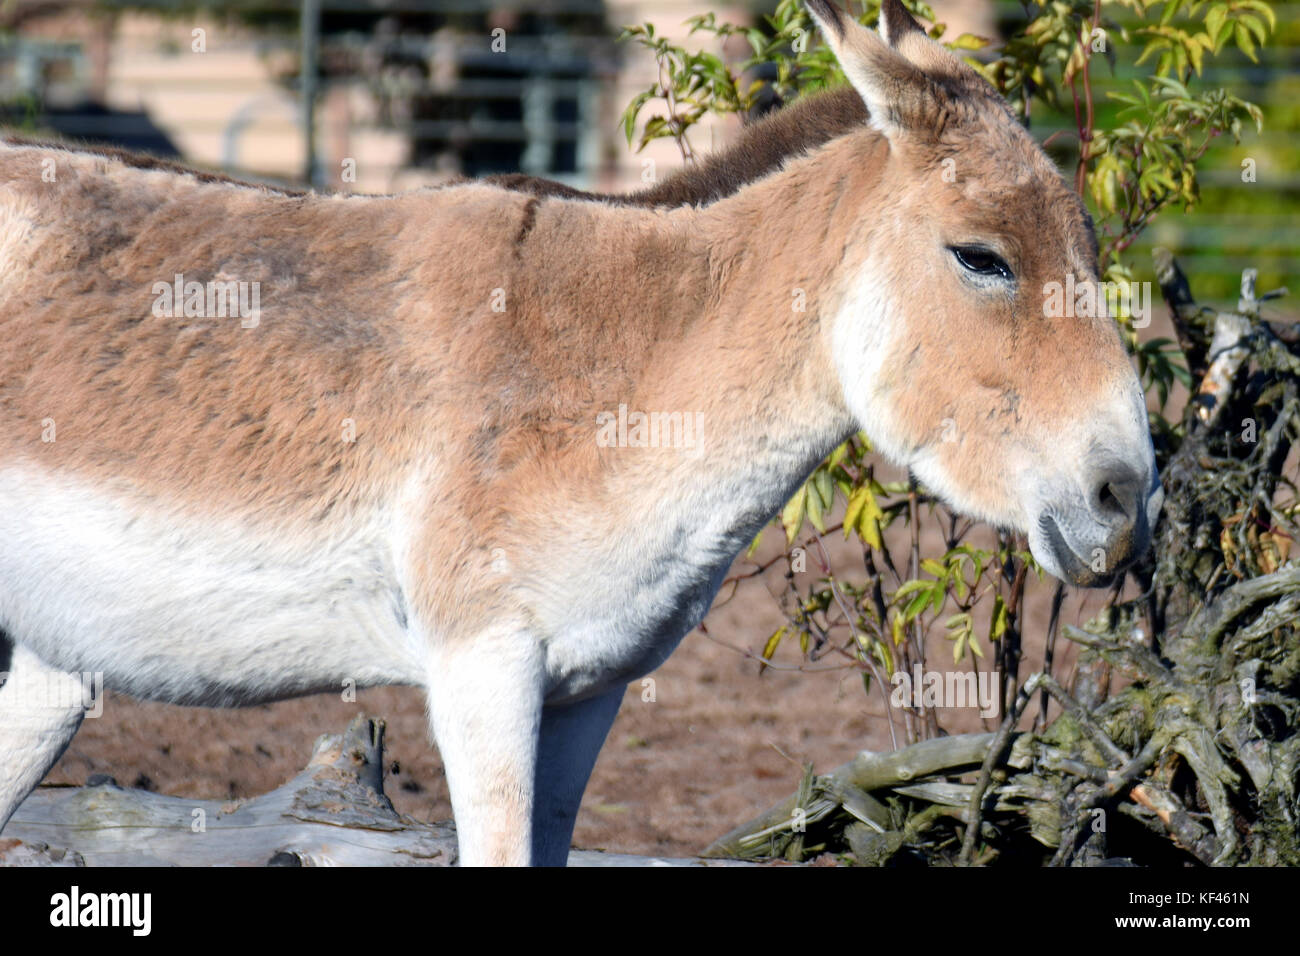 Turkmenian kulan (Equus hemionus kulan), also called Transcaspian wild ass, Turkmenistani onager or simply the kulan. Stock Photo